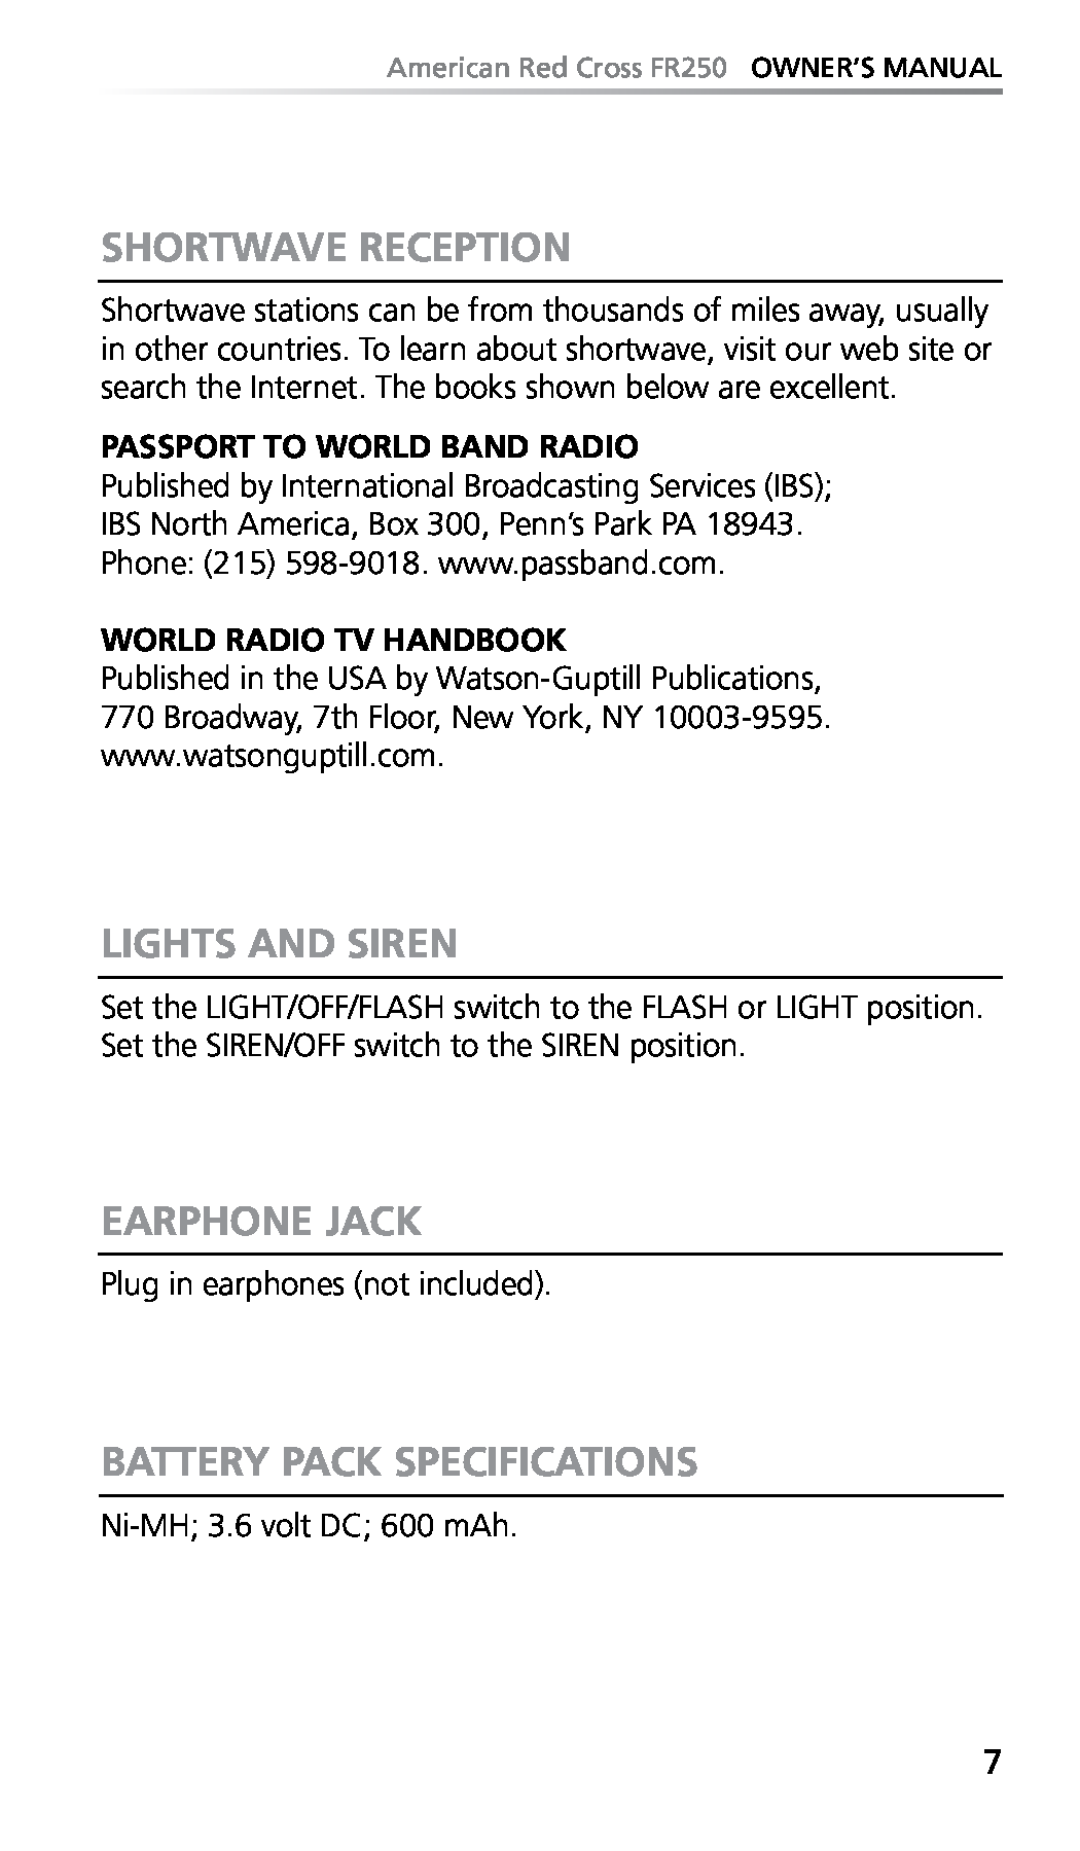 Eton FR250 Shortwave Reception, Lights And Siren, Earphone Jack, Battery Pack Specifications, Passport To World Band Radio 